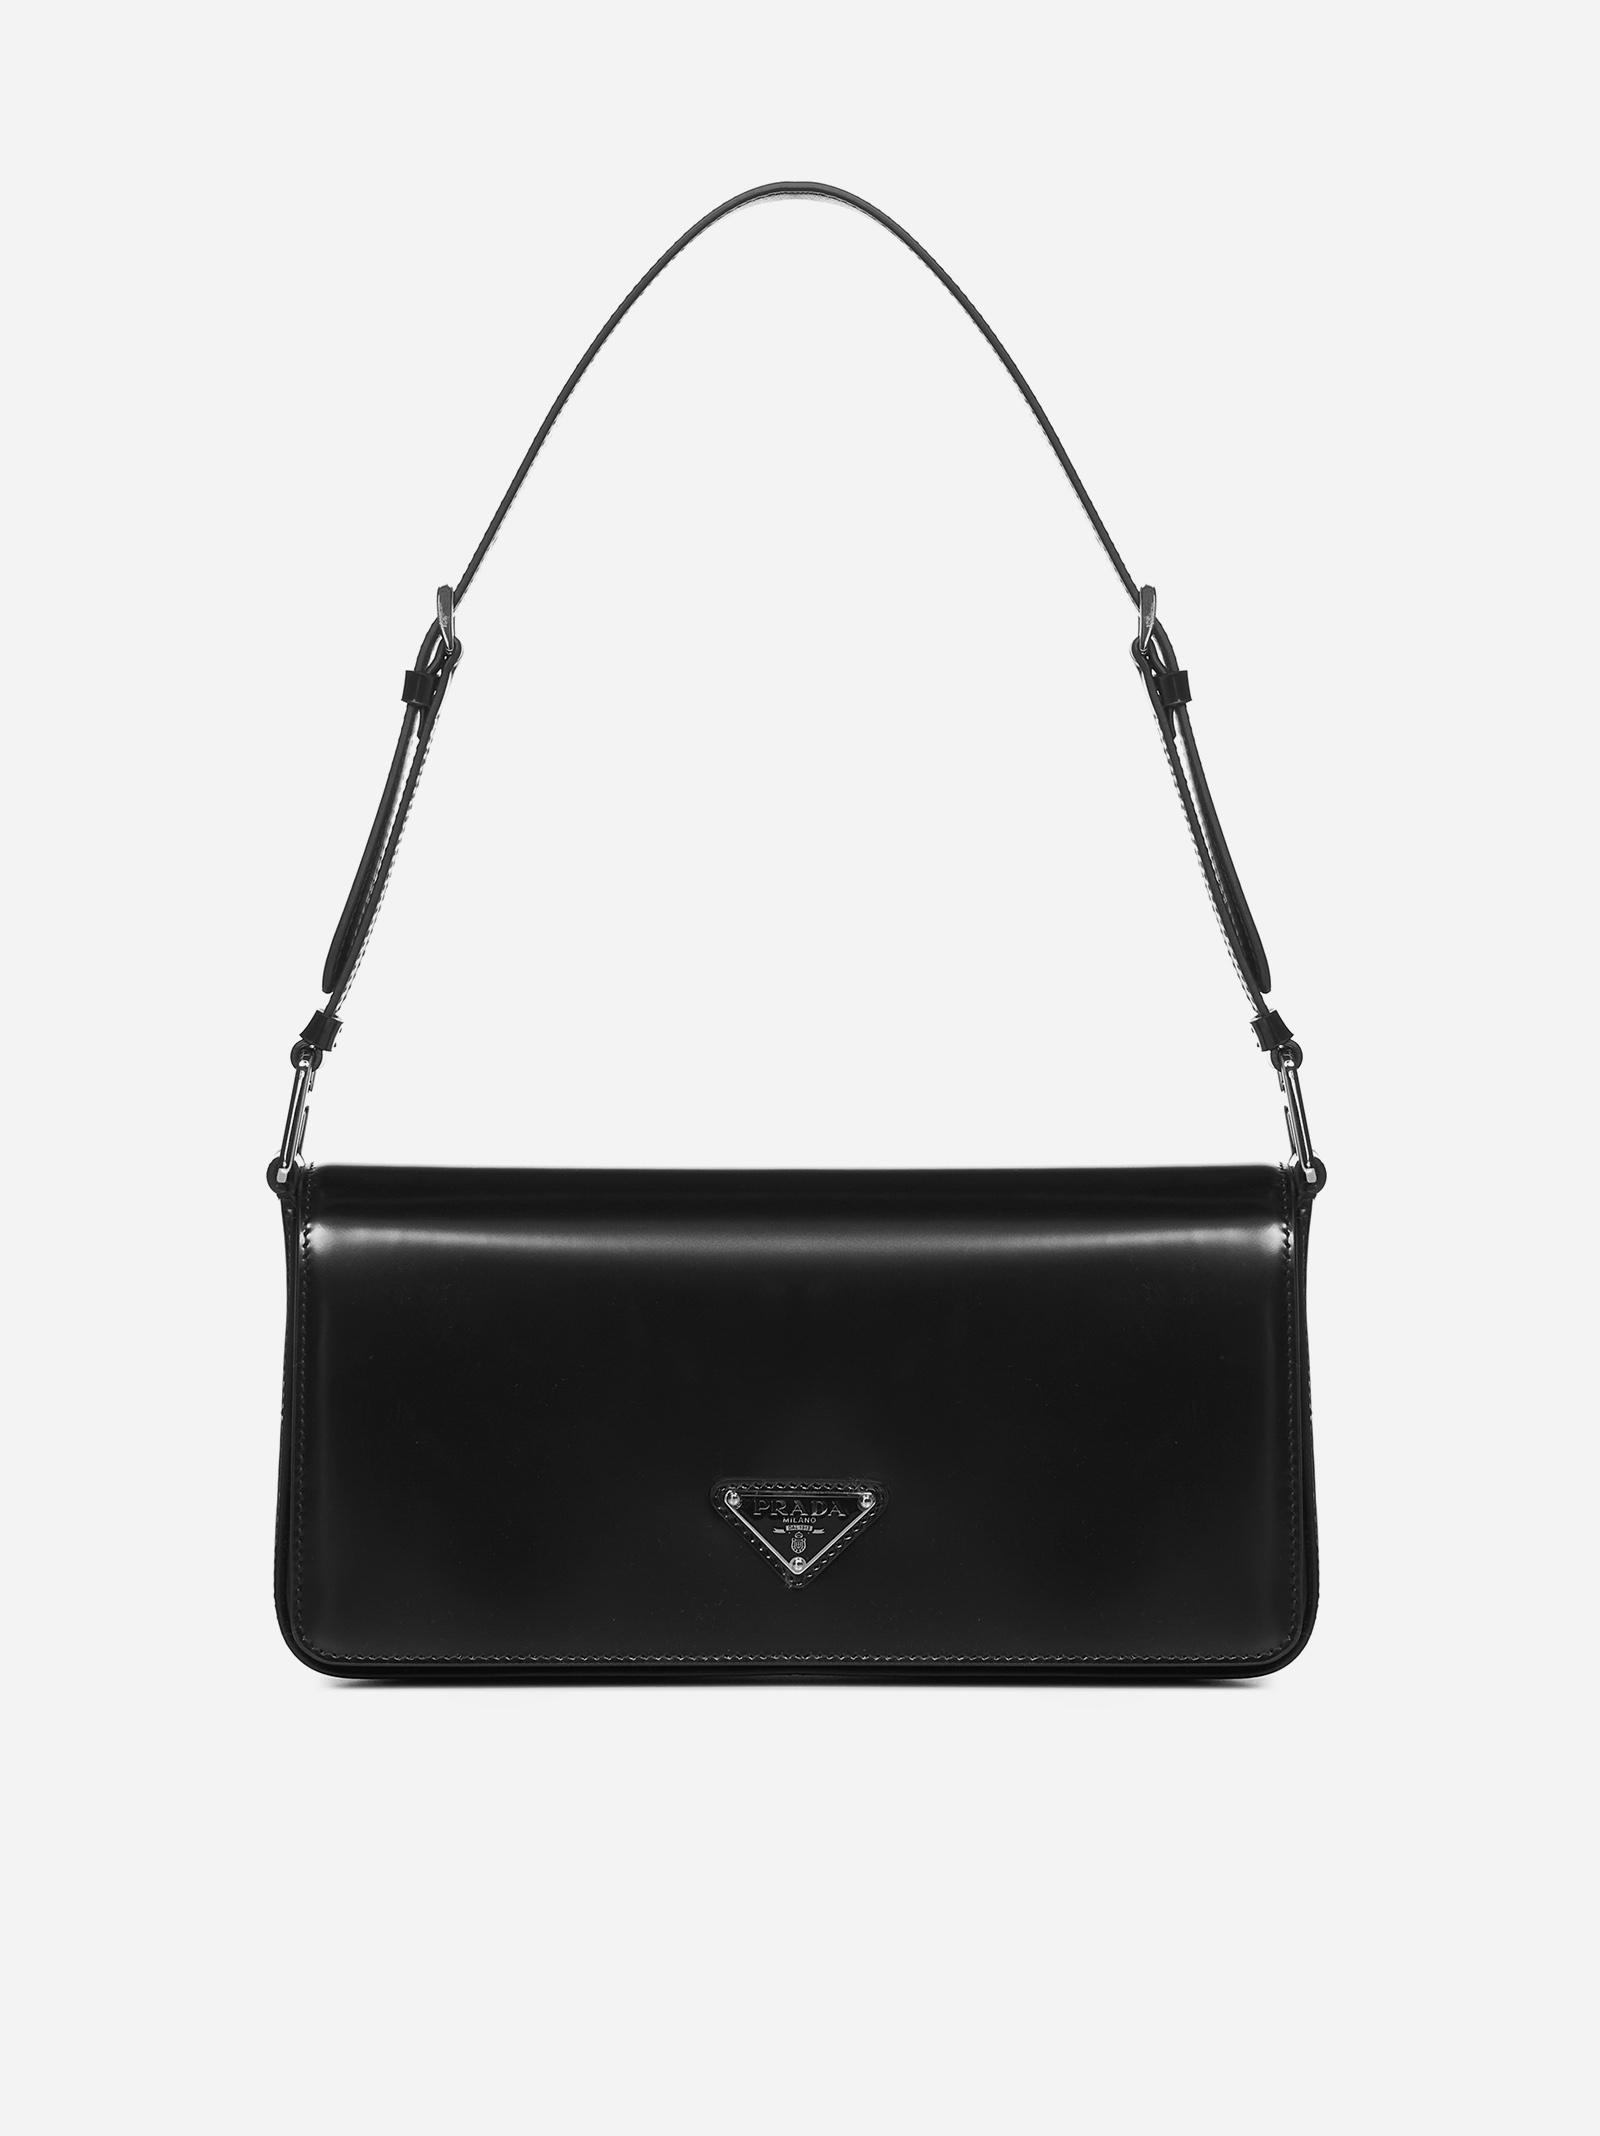 Prada Femme Leather Bag in Black | Lyst